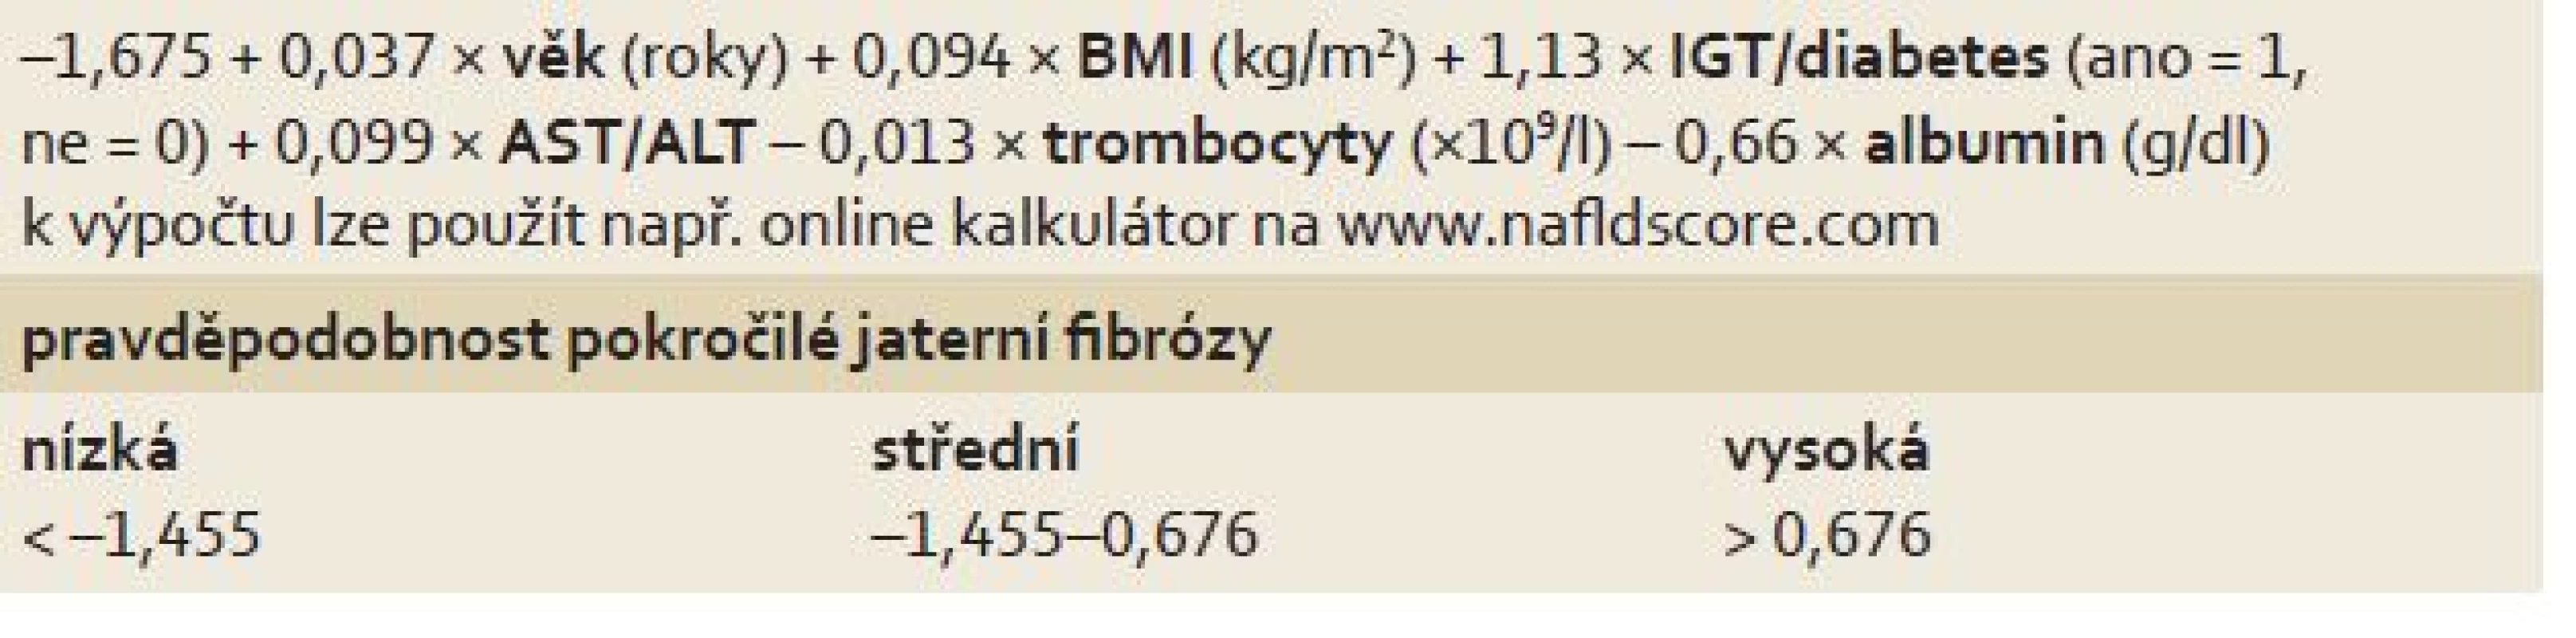 NAFLD Fibrosis Score, podle [22].
Tab. 1. NAFLD Fibrosis Score, according to [22].